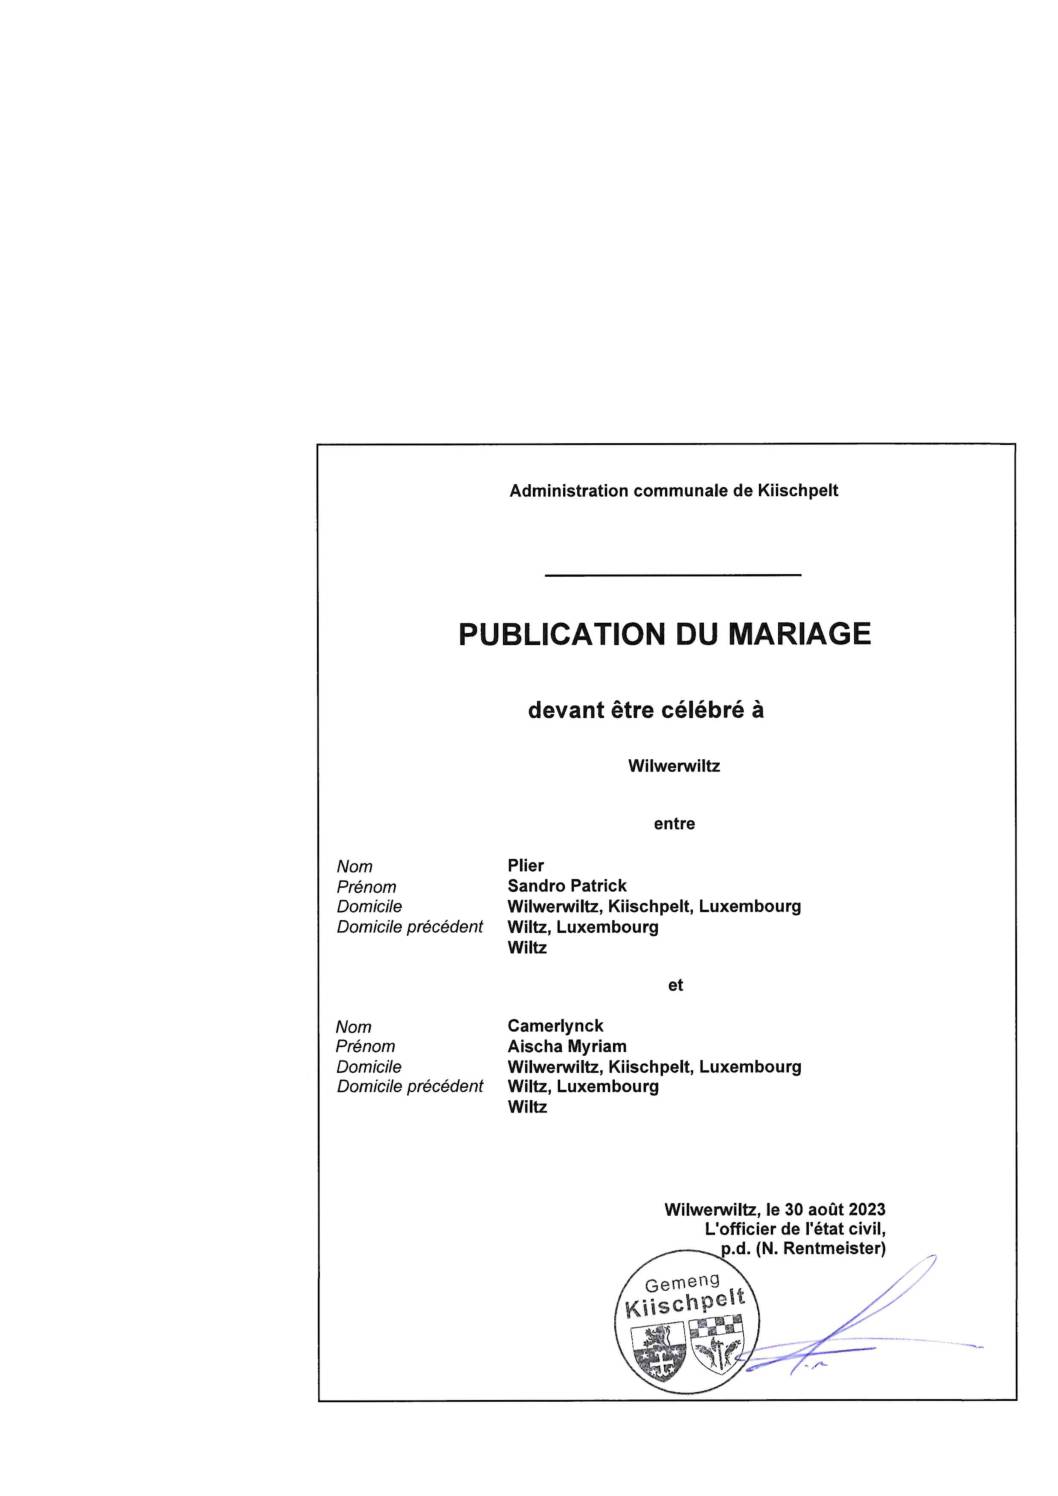 Publication de mariage - Plier Camerlynck